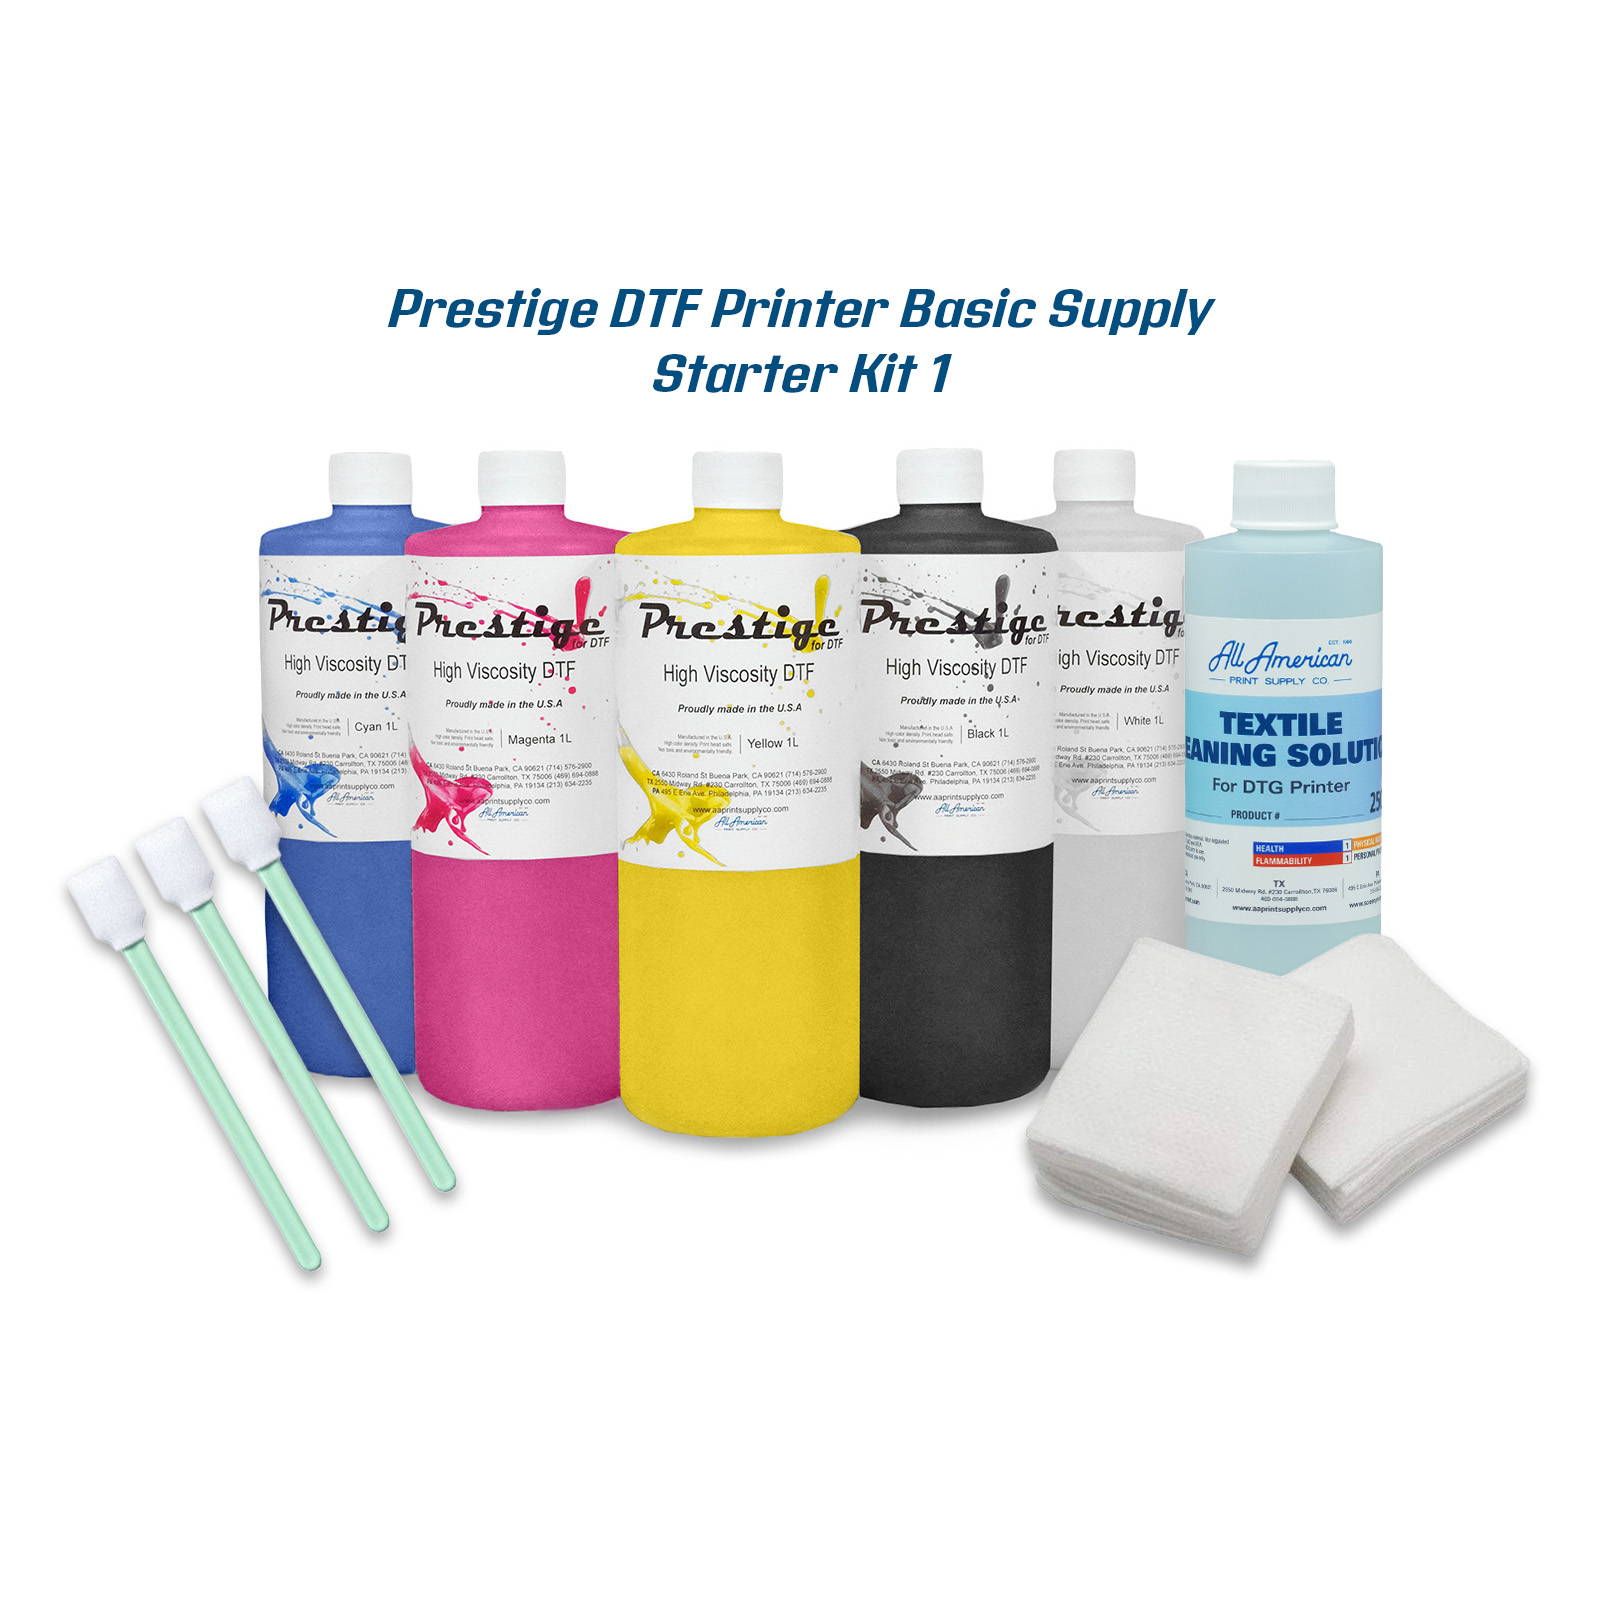 Prestige DTF Printer Basic Supply Starter Kit 1